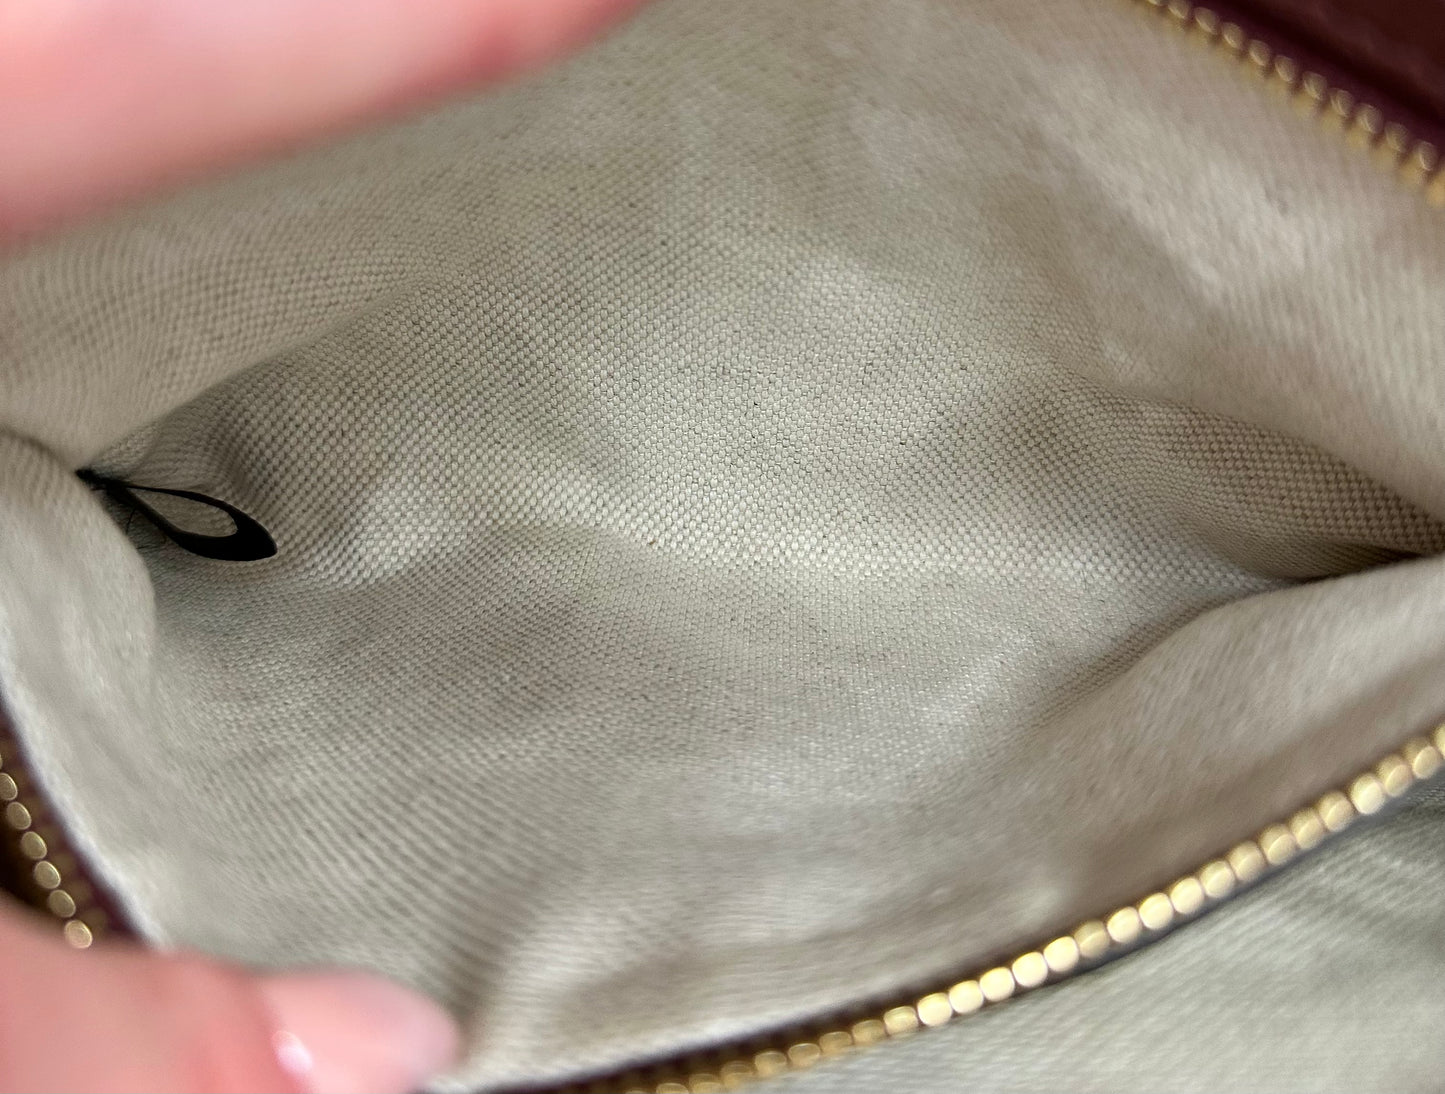 Inside zipper-pocket